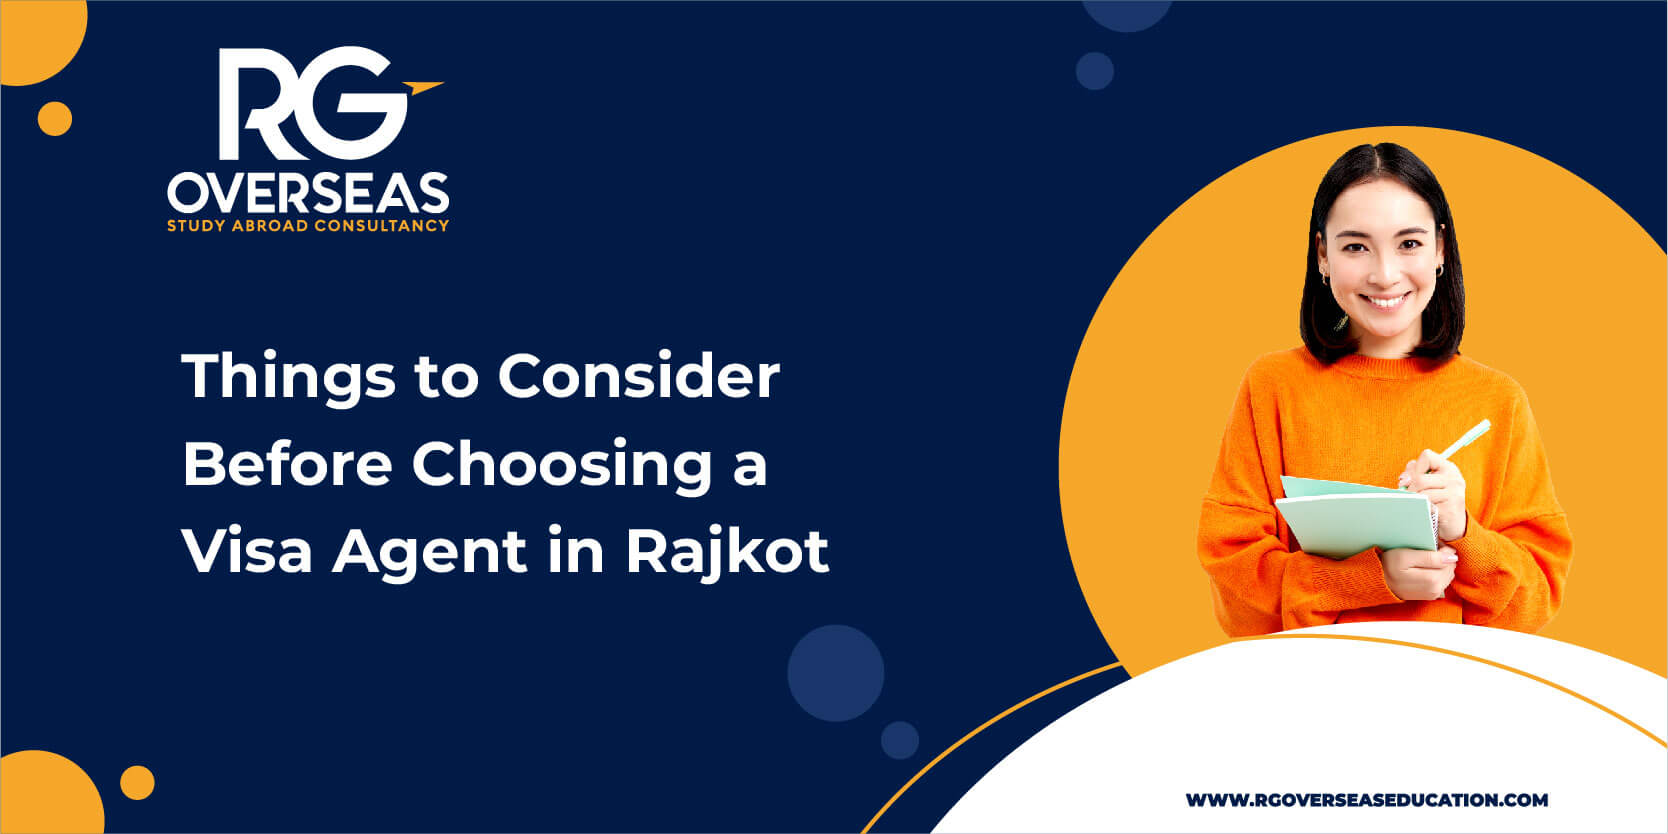 Things to Consider Before Choosing a Visa Agent in Rajkot